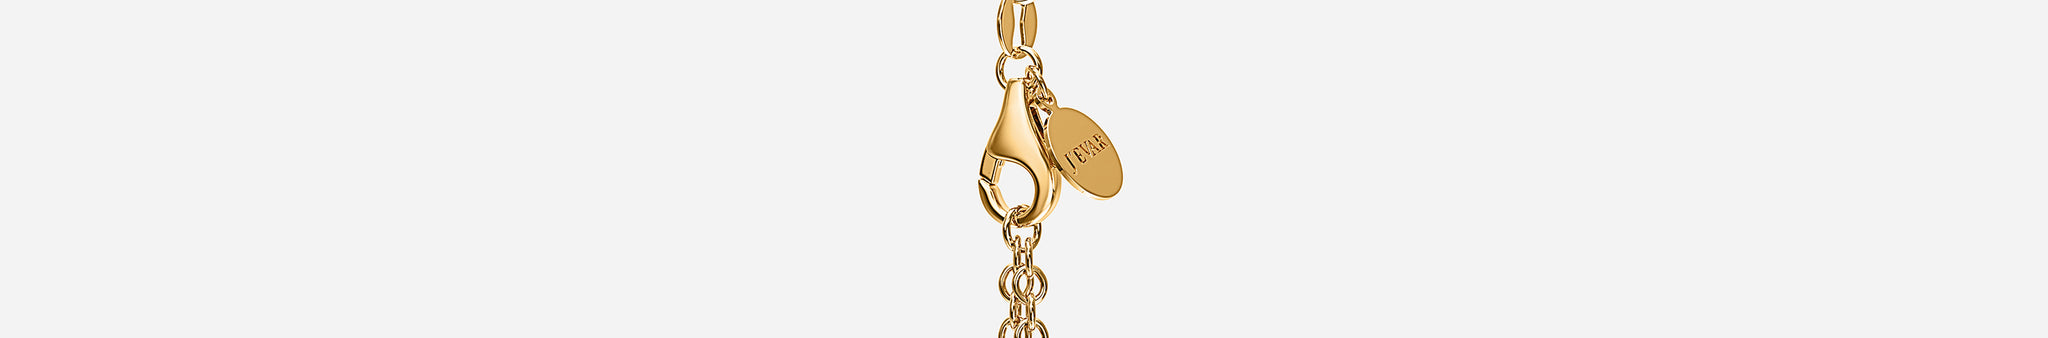 J'EVAR 14KT Yellow Gold Heart Key ALTR Lab Grown Diamond Necklace Lock View